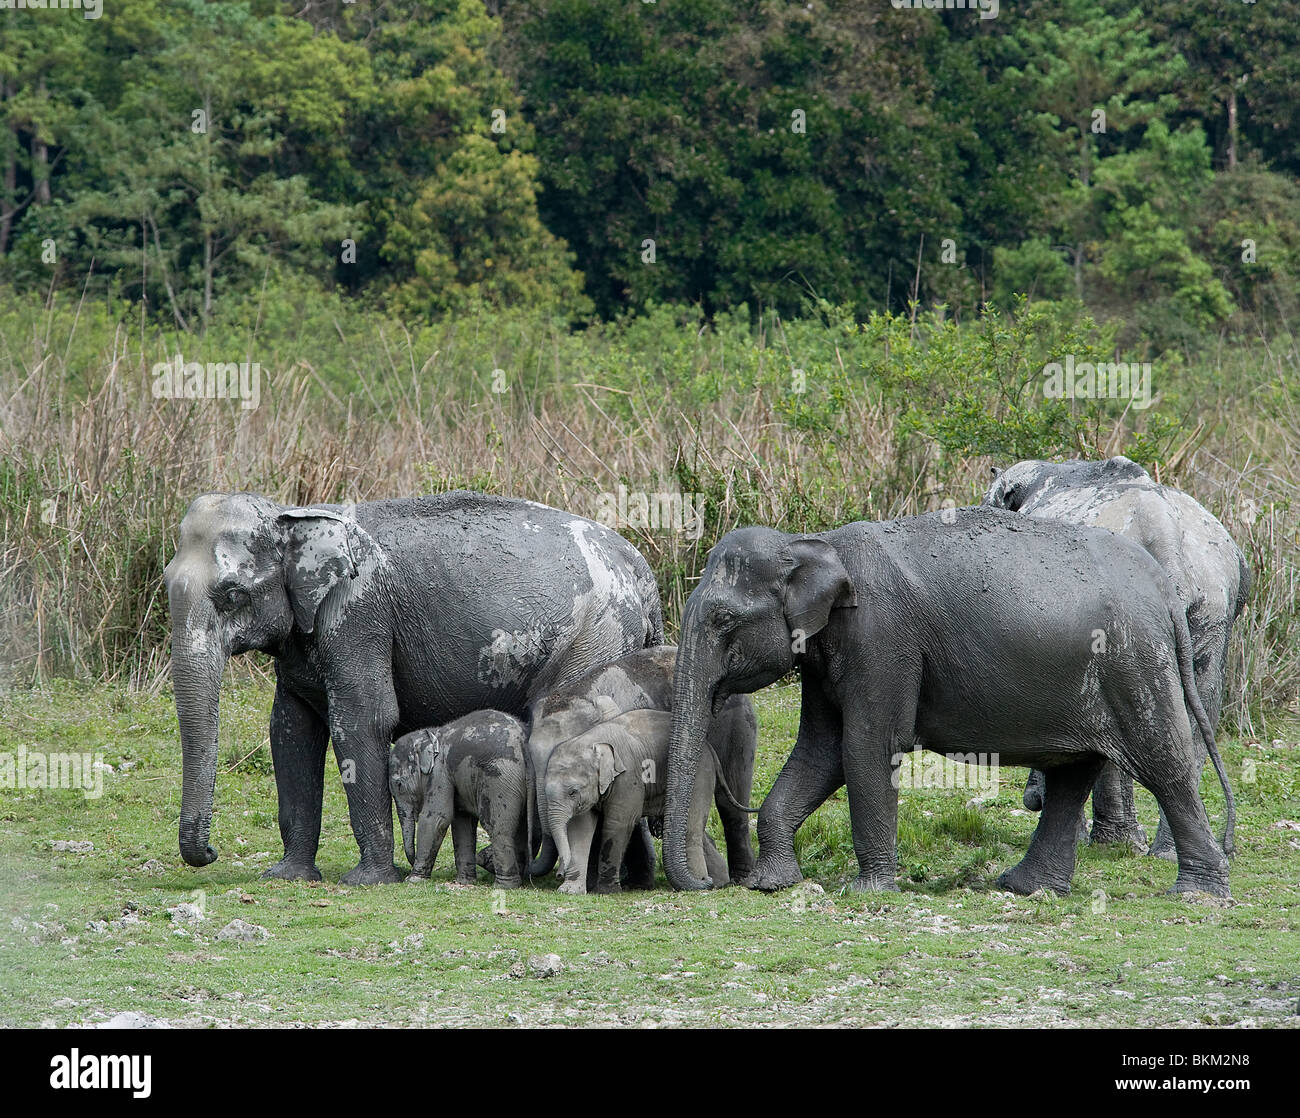 Los elefantes asiáticos, Elephas maximus, con bebés emergen del bosque para beber, el Parque Nacional Kaziranga, India Foto de stock